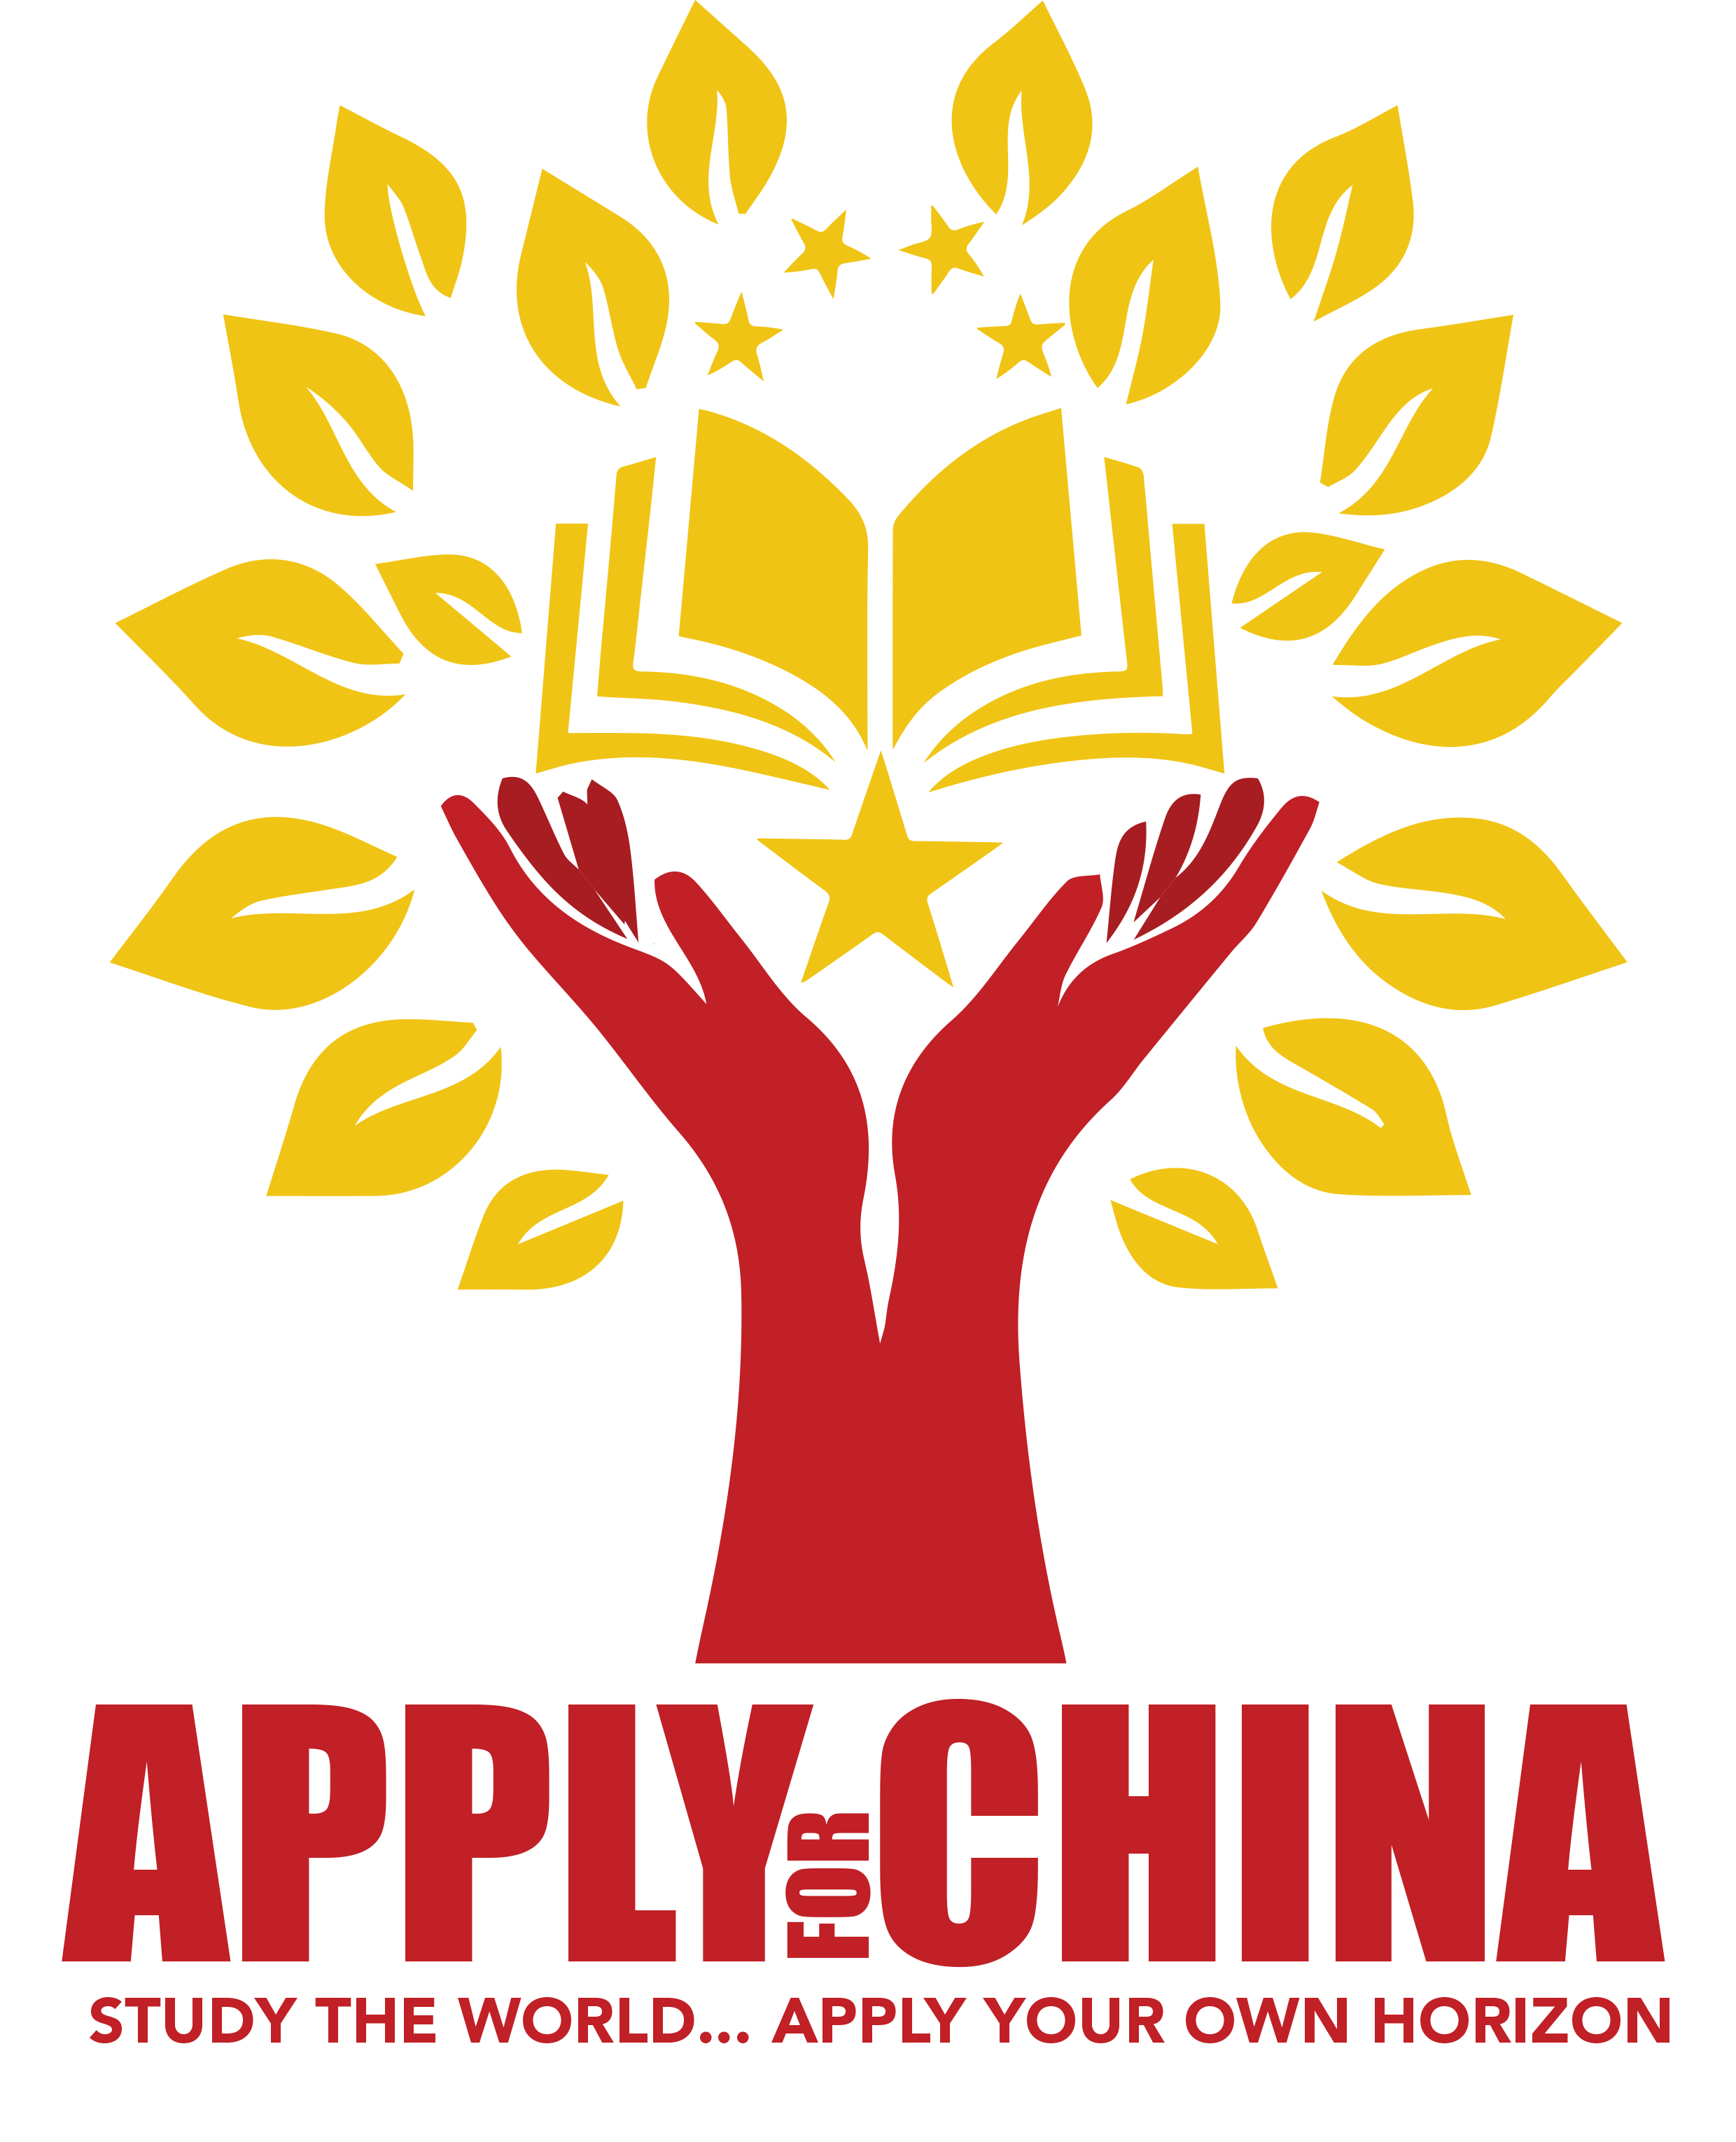  Applyforchina